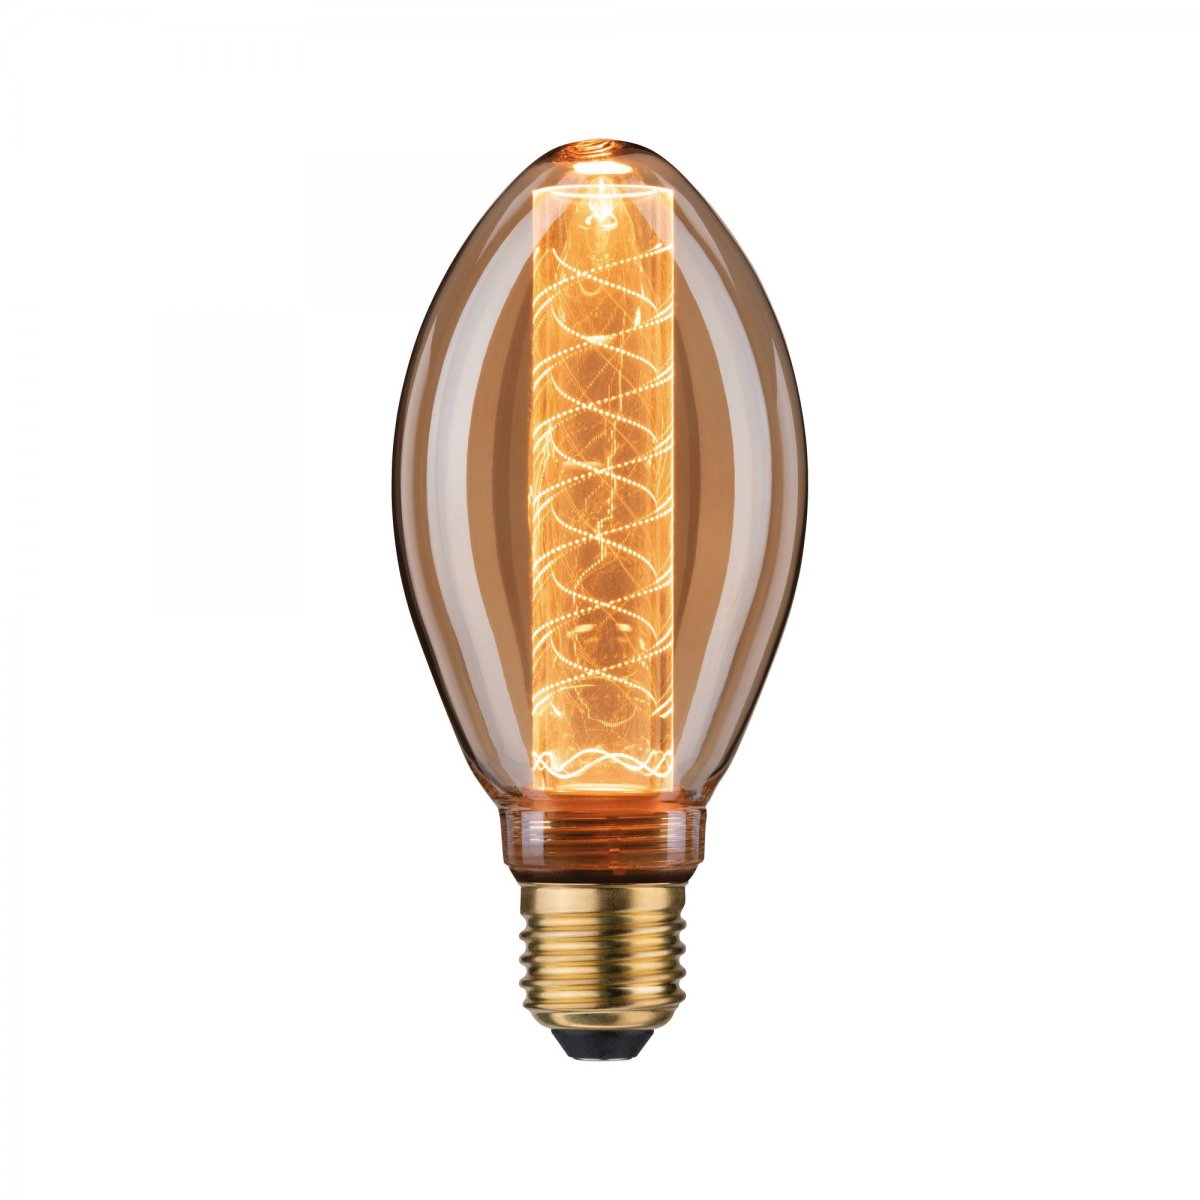 Paulmann No. 28827 LED Vintage-Birne B75 Inner Glow E27 Gold Spiralmuster  dimmbar --> Leuchten & Lampen online kaufen